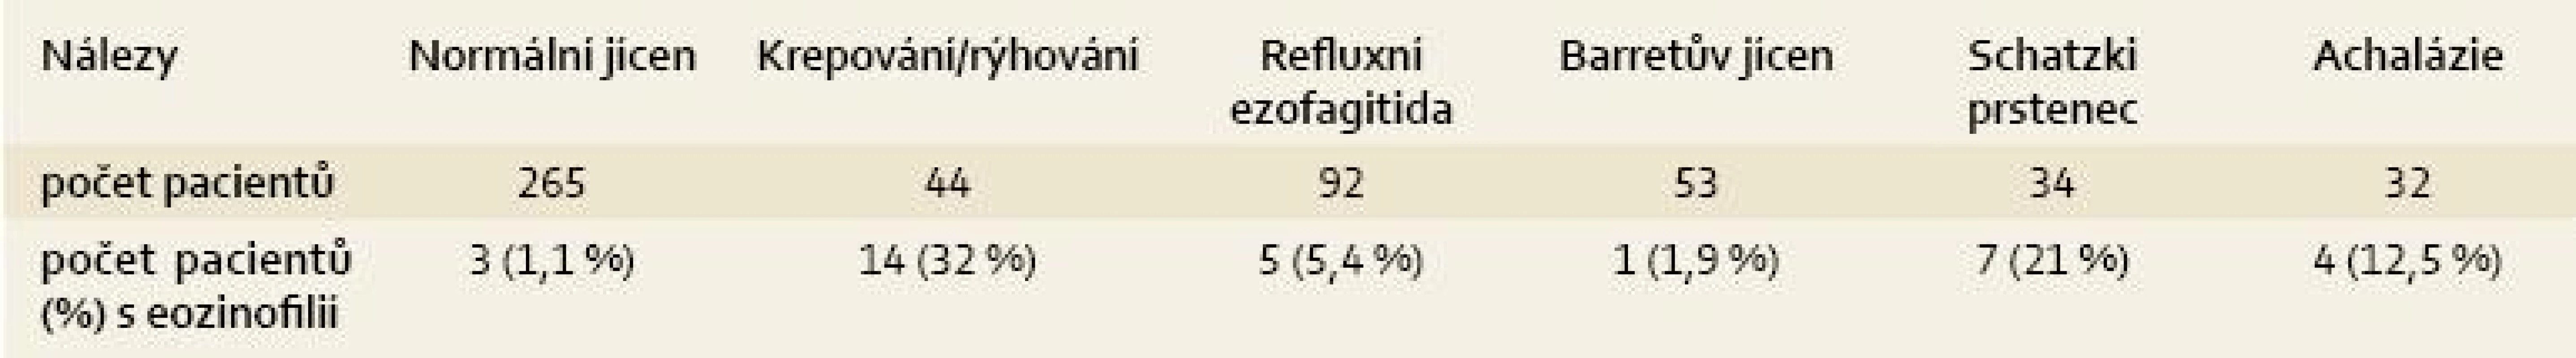 Eozinofilie u různých diagnóz – vlastní výsledky.
Tab. 2. Eosinophilia with various diagnoses – our own results.